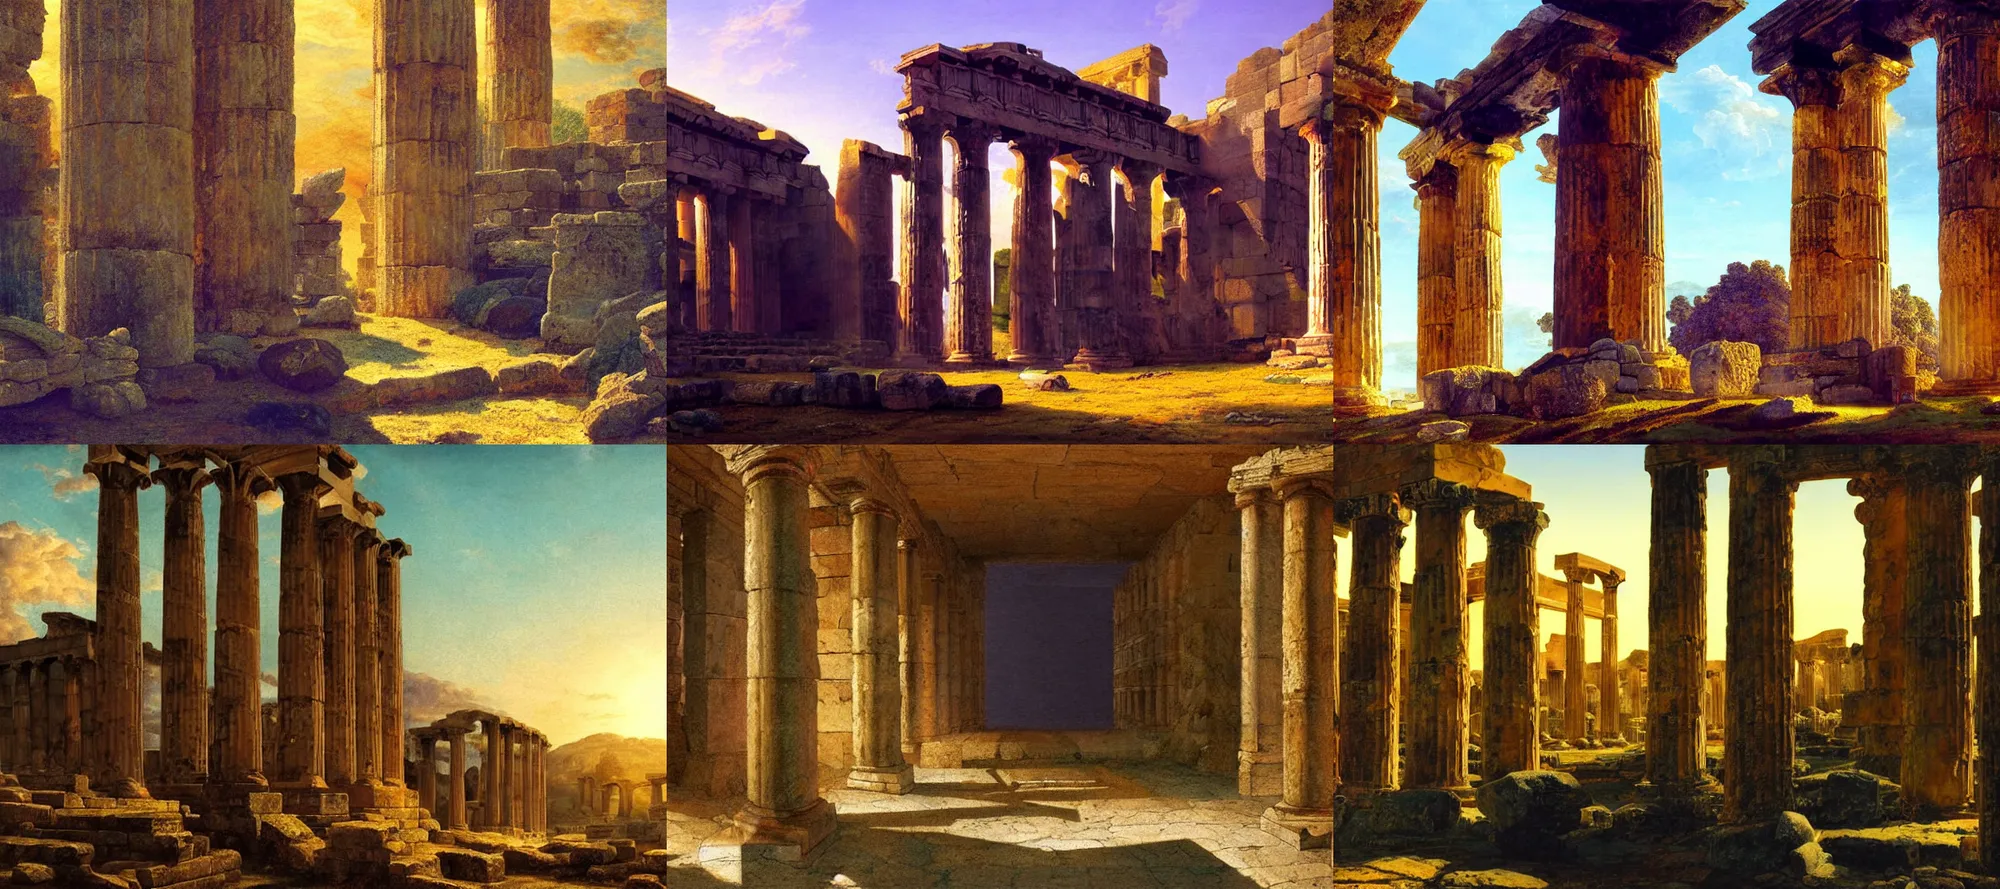 Prompt: closeup, inside ancient greek ruins, digital painting, concept art, colourful, golden hour, volumetric lighting, caspar david friedrich, blue and purple tones